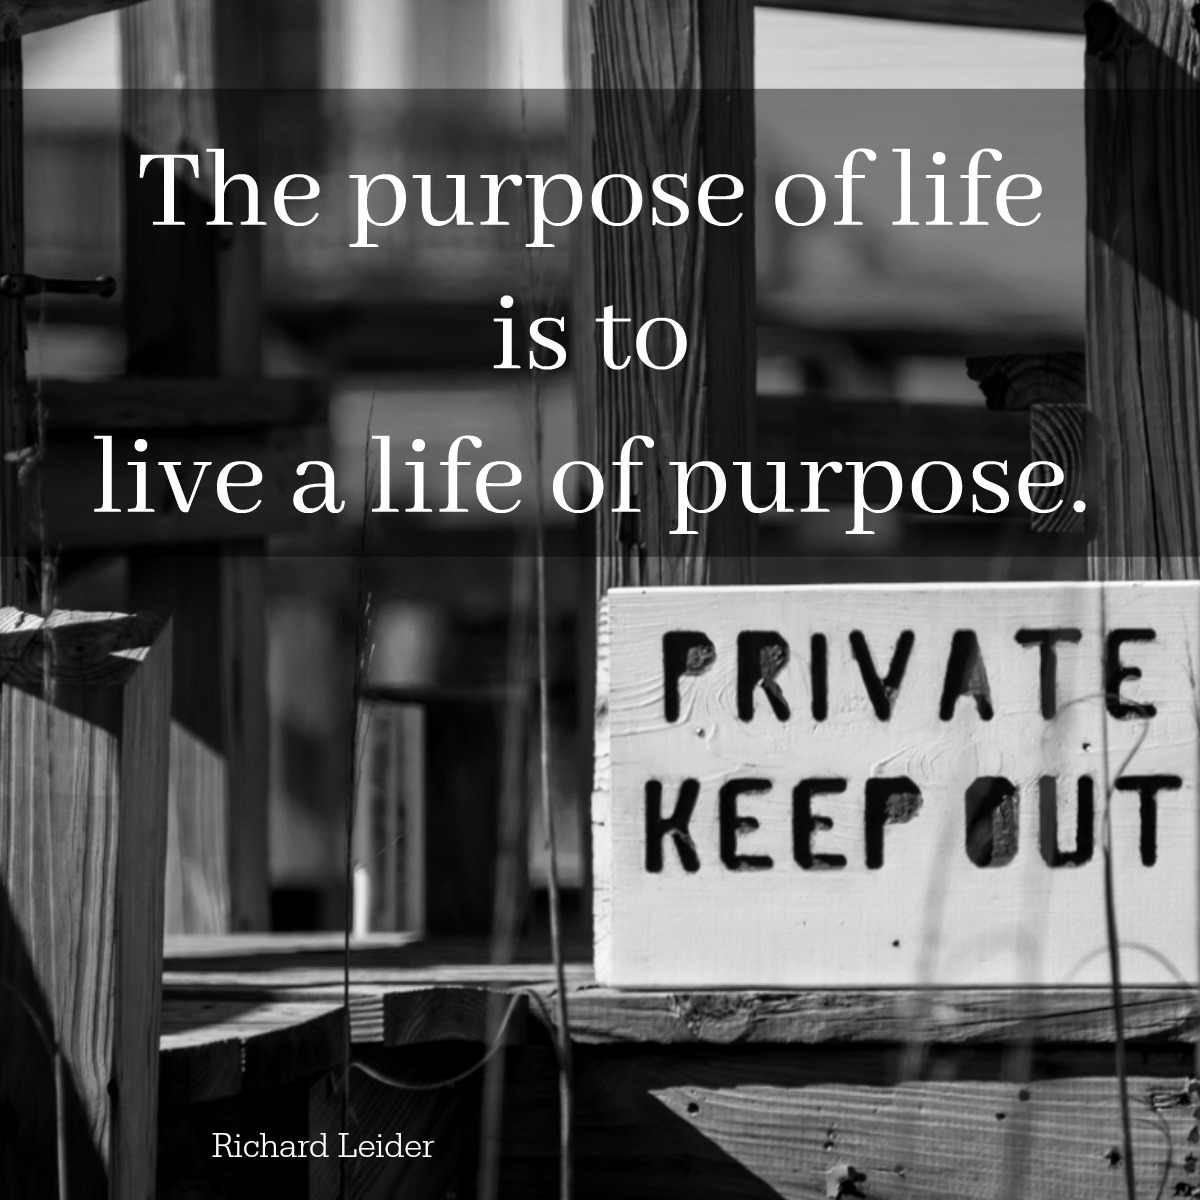 life of purpose